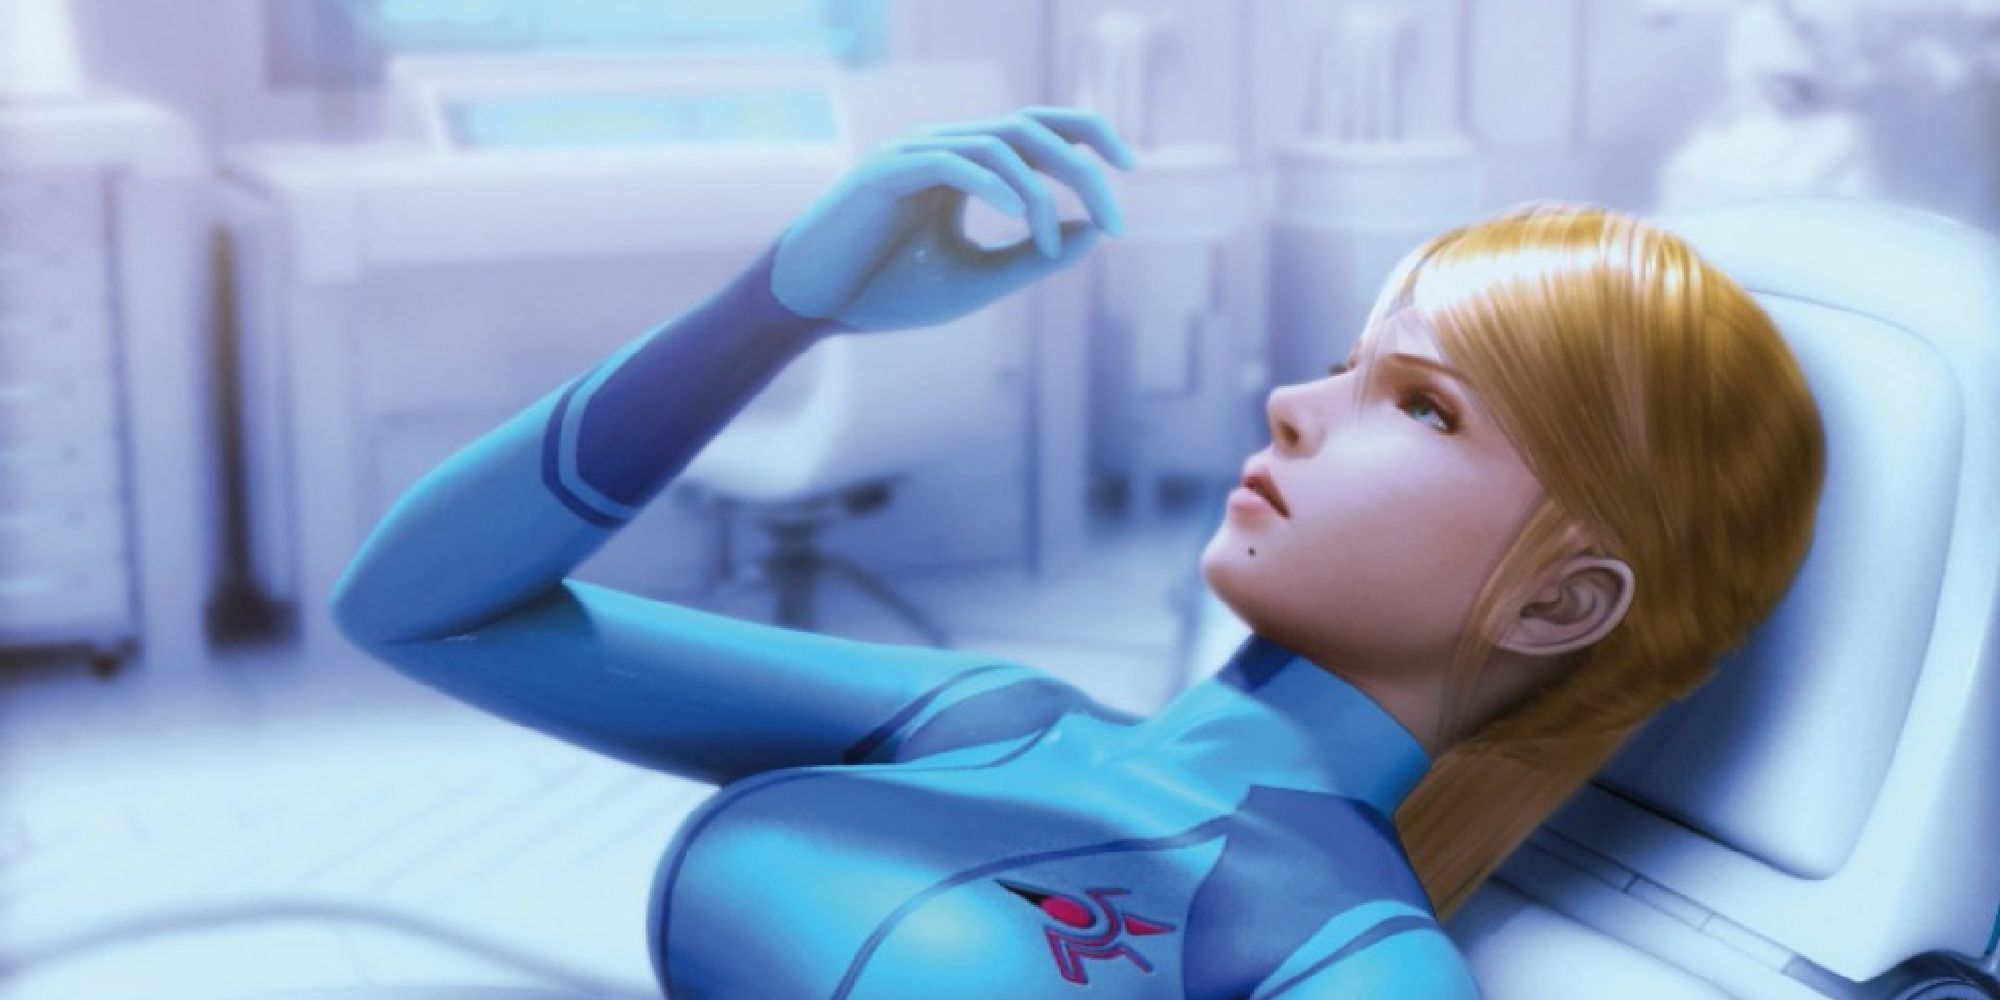 Samus lying down in her Zero Suit in Metroid Other M